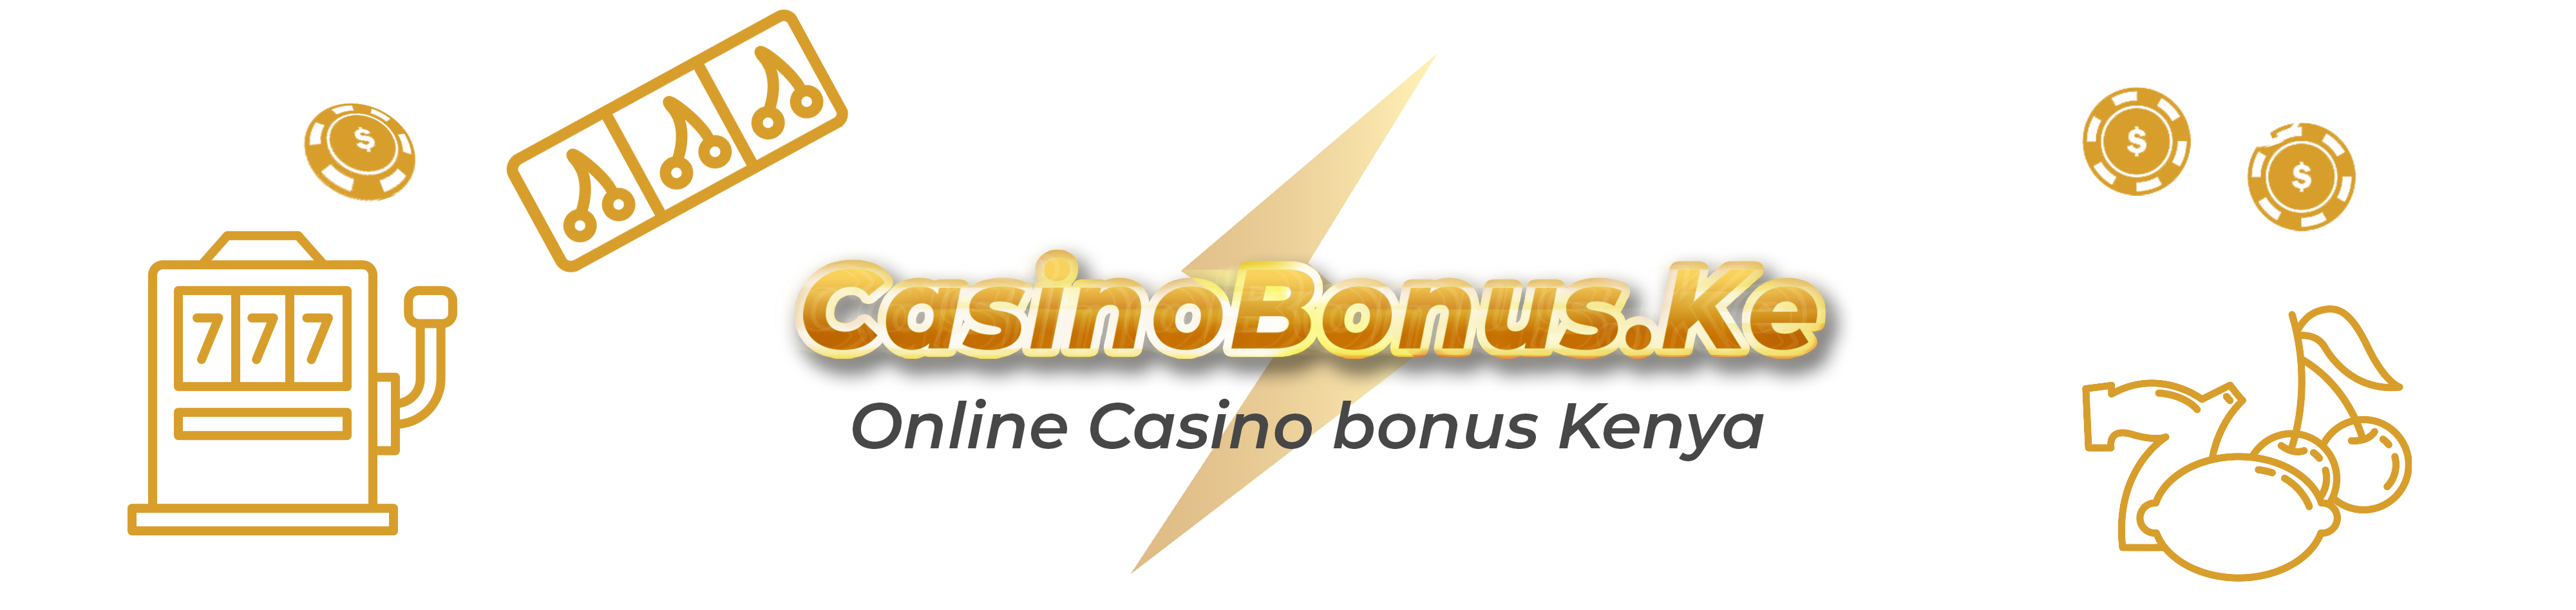 Casino Bonus Kenya